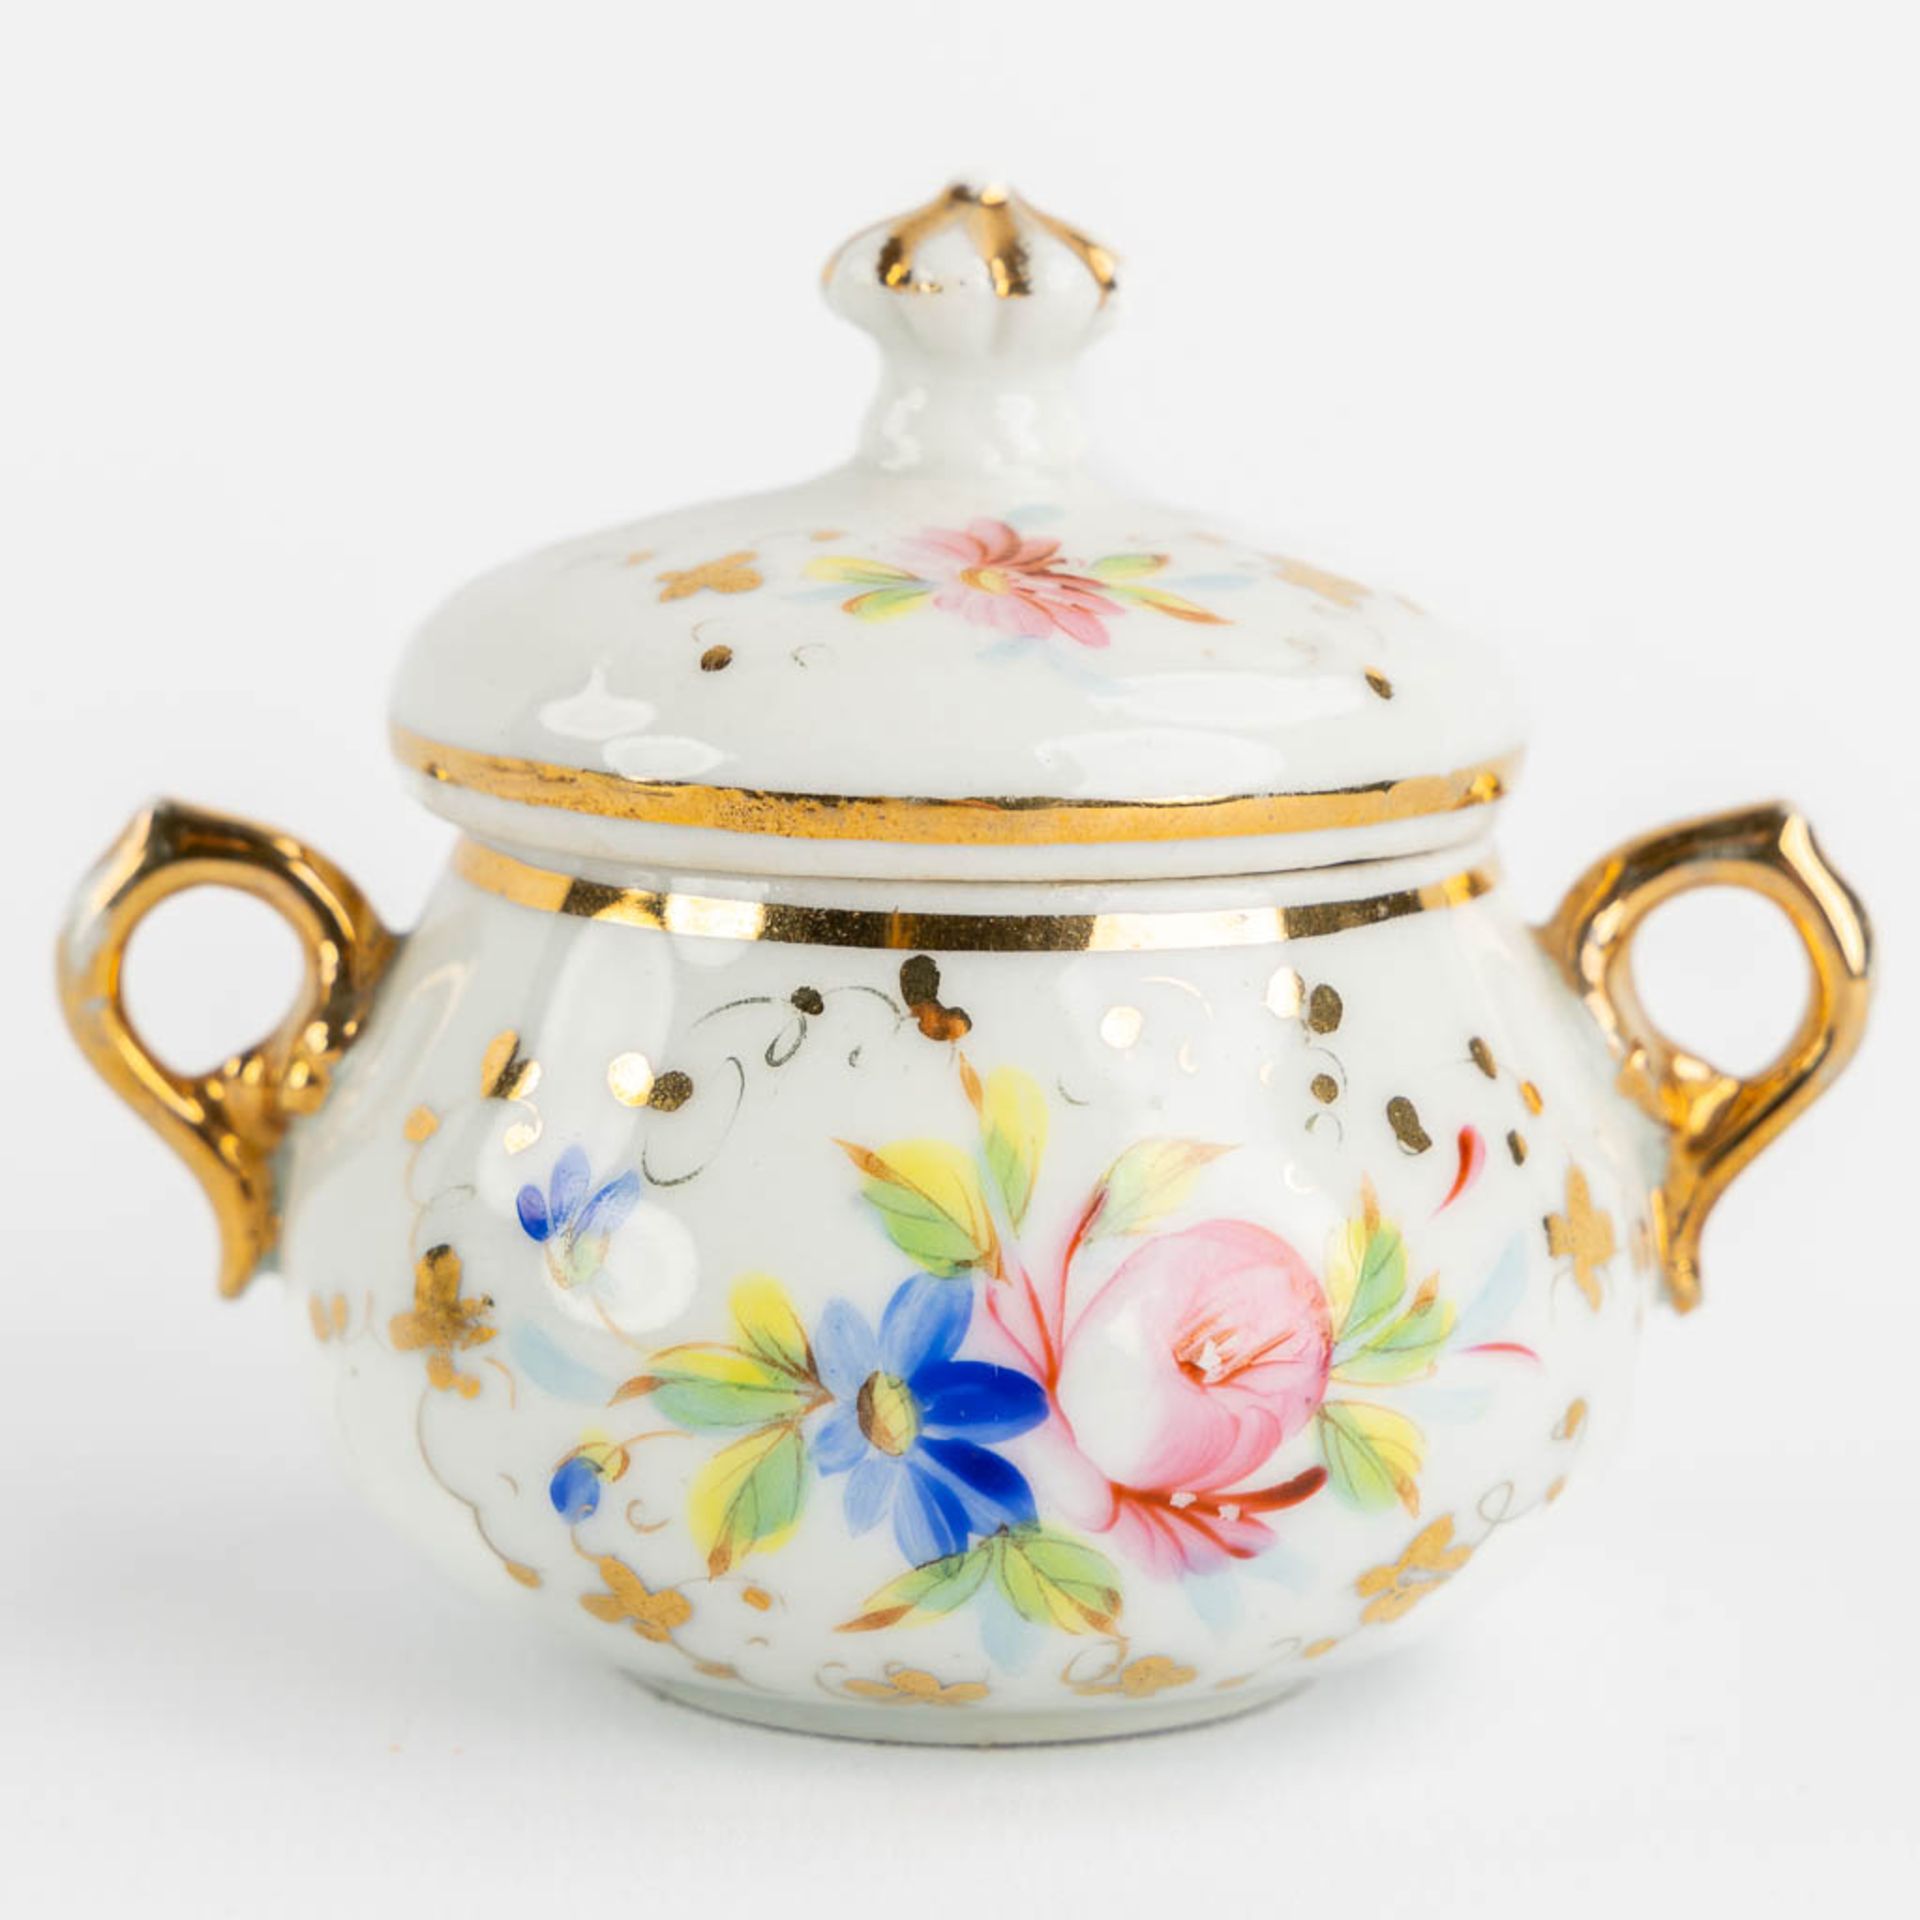 A children's tea set, polychrome porcelain. Circa 1900-1920. (L:20 x W:33 x H:10 cm) - Image 9 of 11